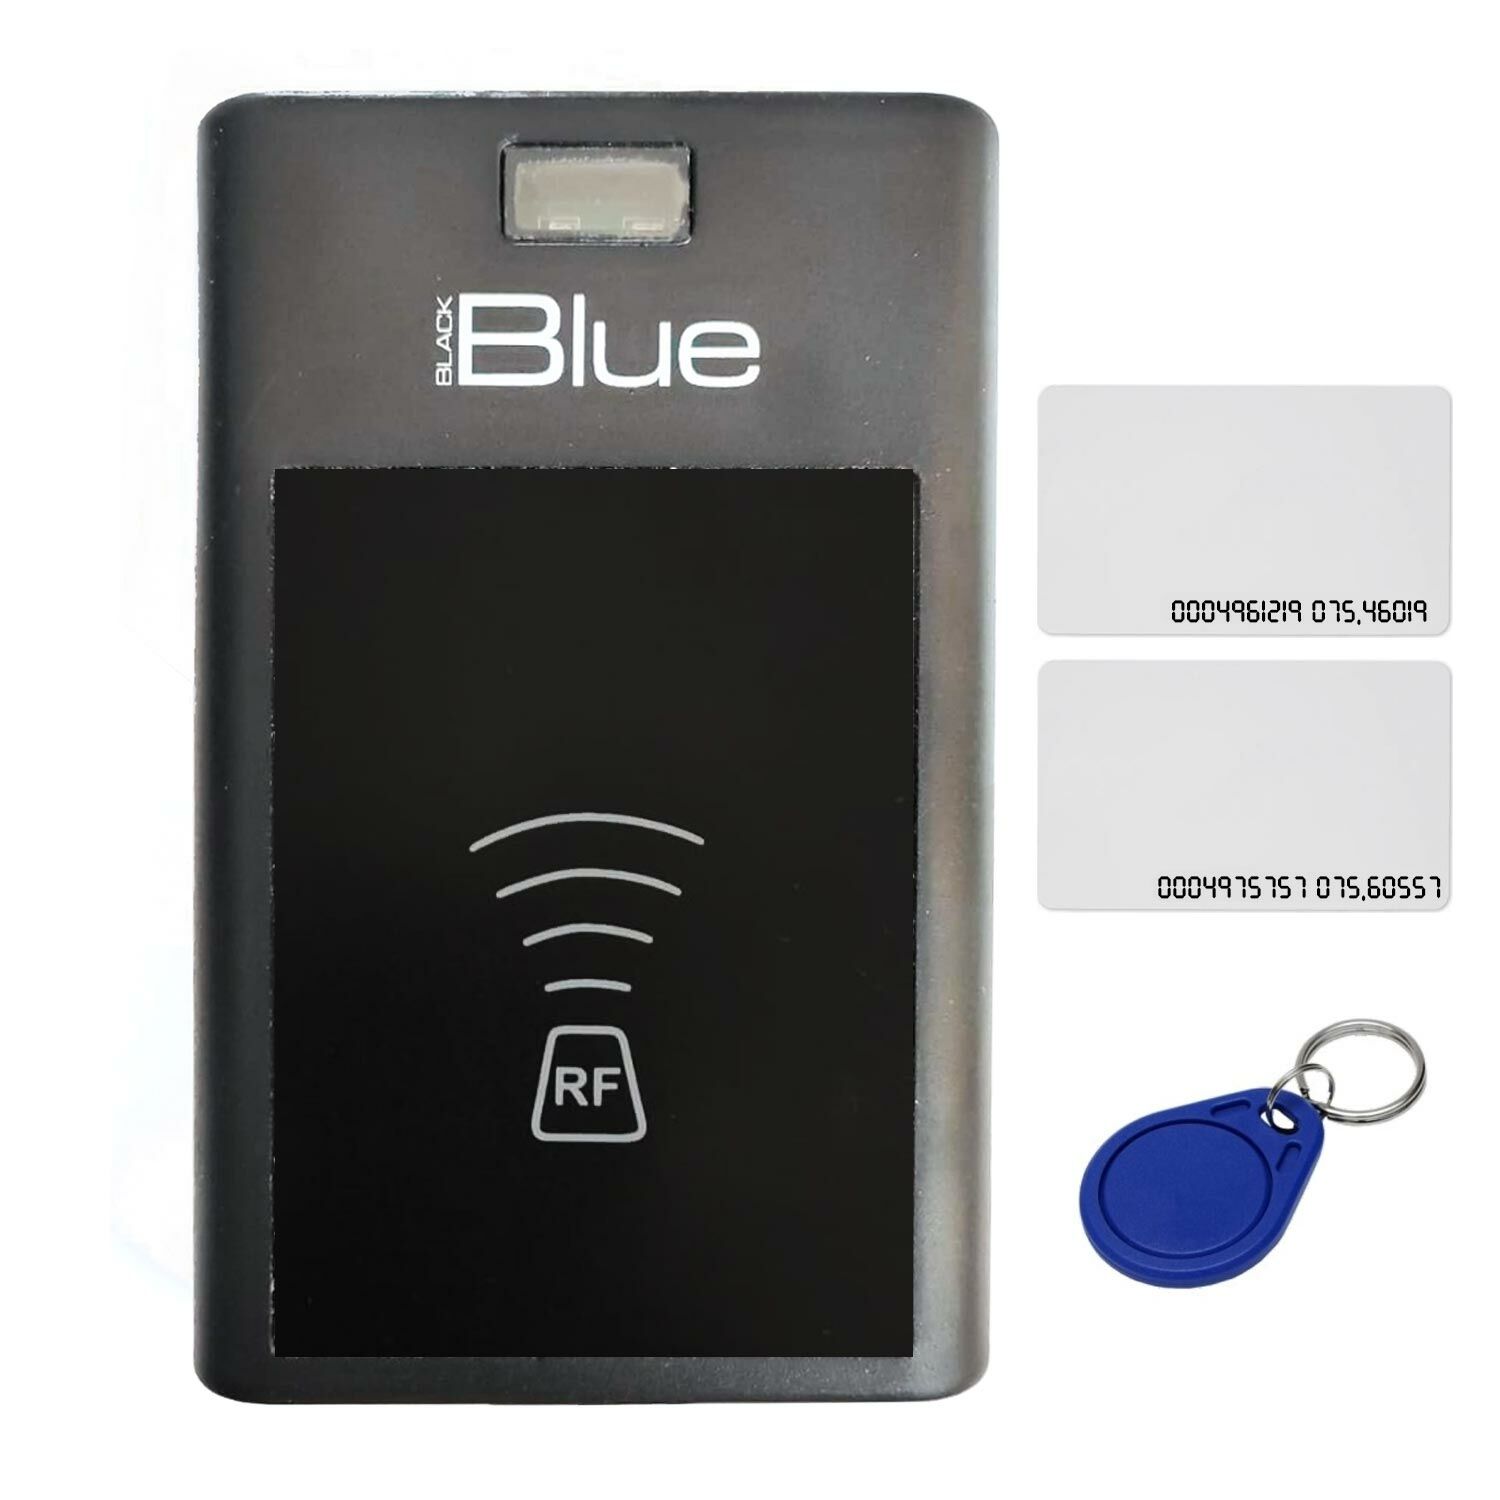 ELEKTRONİK GÖSTERGEÇ KAPI AÇMA RFID KARTLI BLACK BLUE 1005602